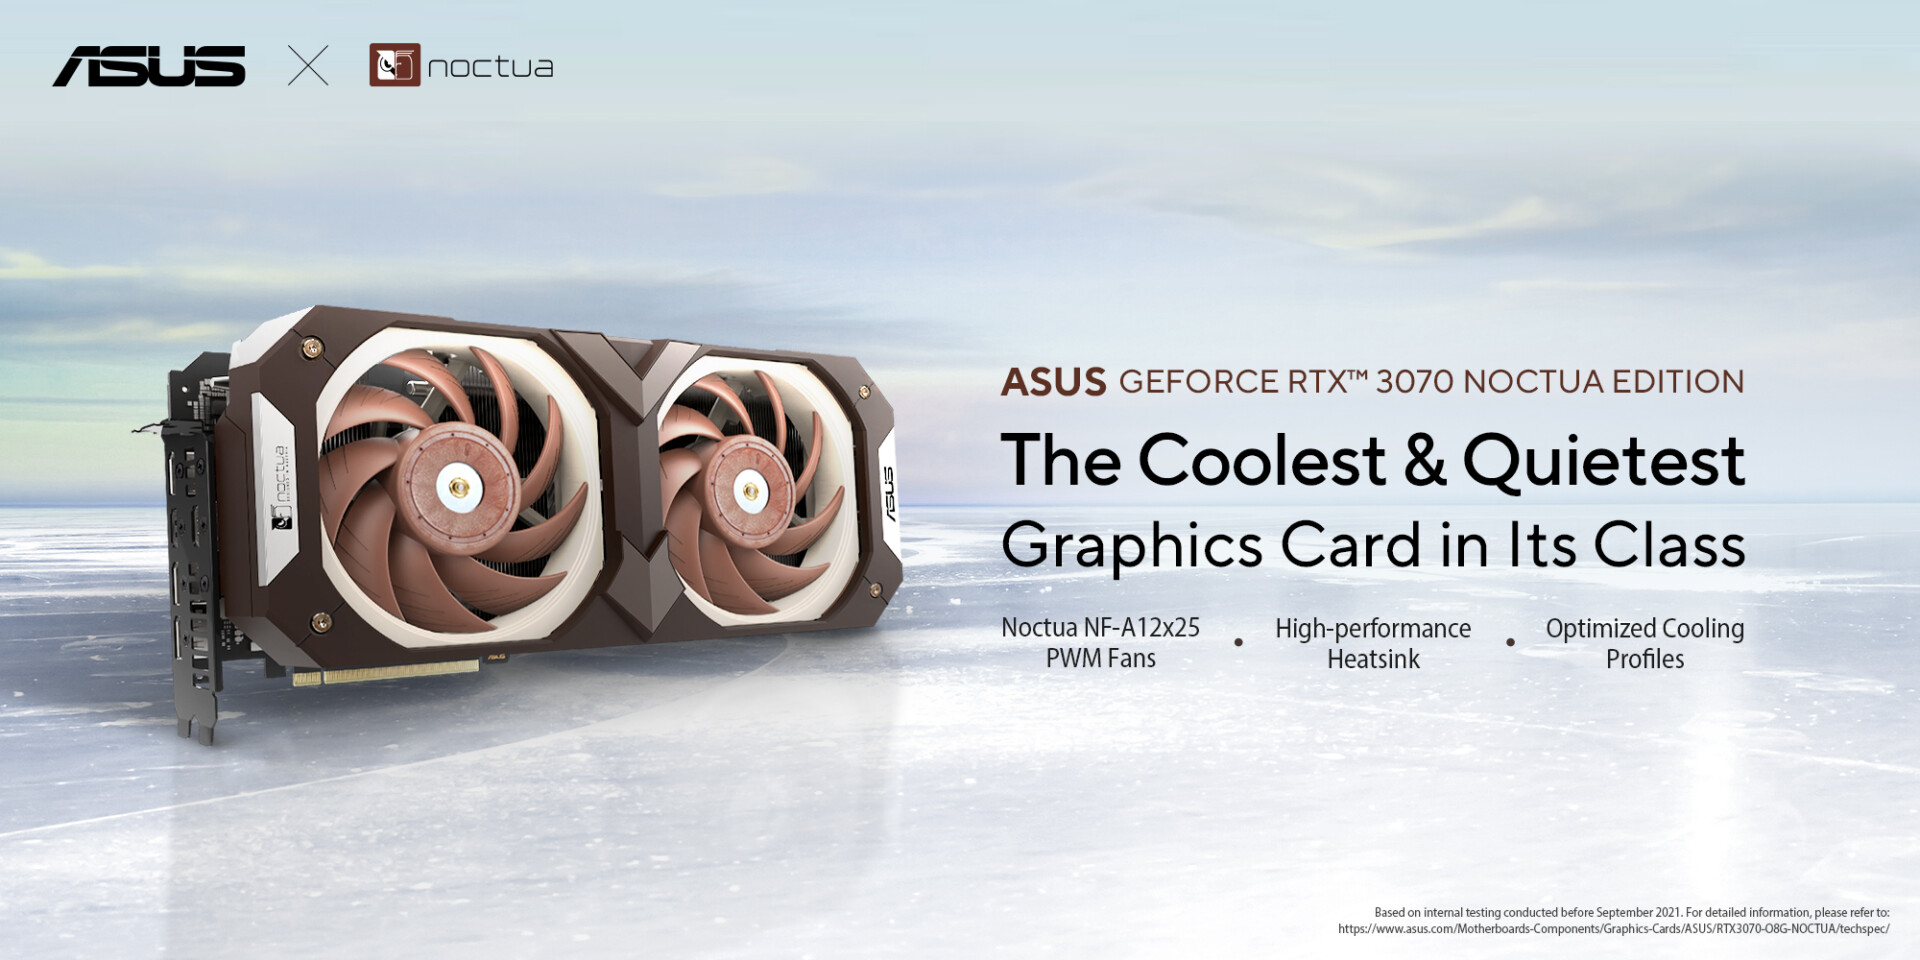 ASUS GeForce RTX 3070 Noctua Edition promo